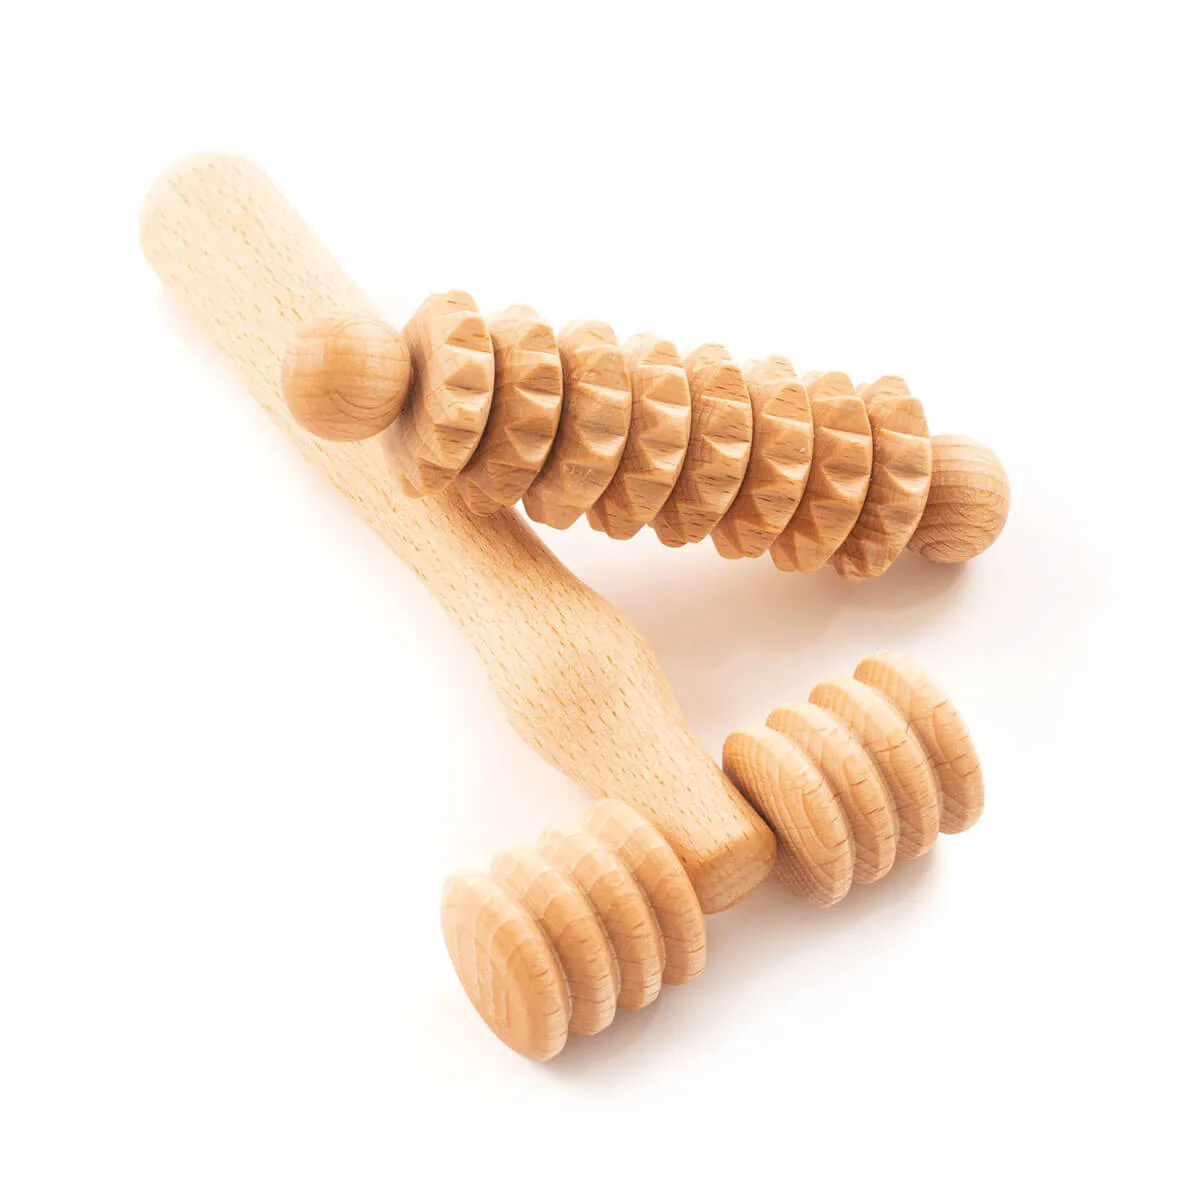 wooden-body-massage-set-derma-roller-for-face-neck-arm-hand-shoulders-tuuli-accessories-994.webp